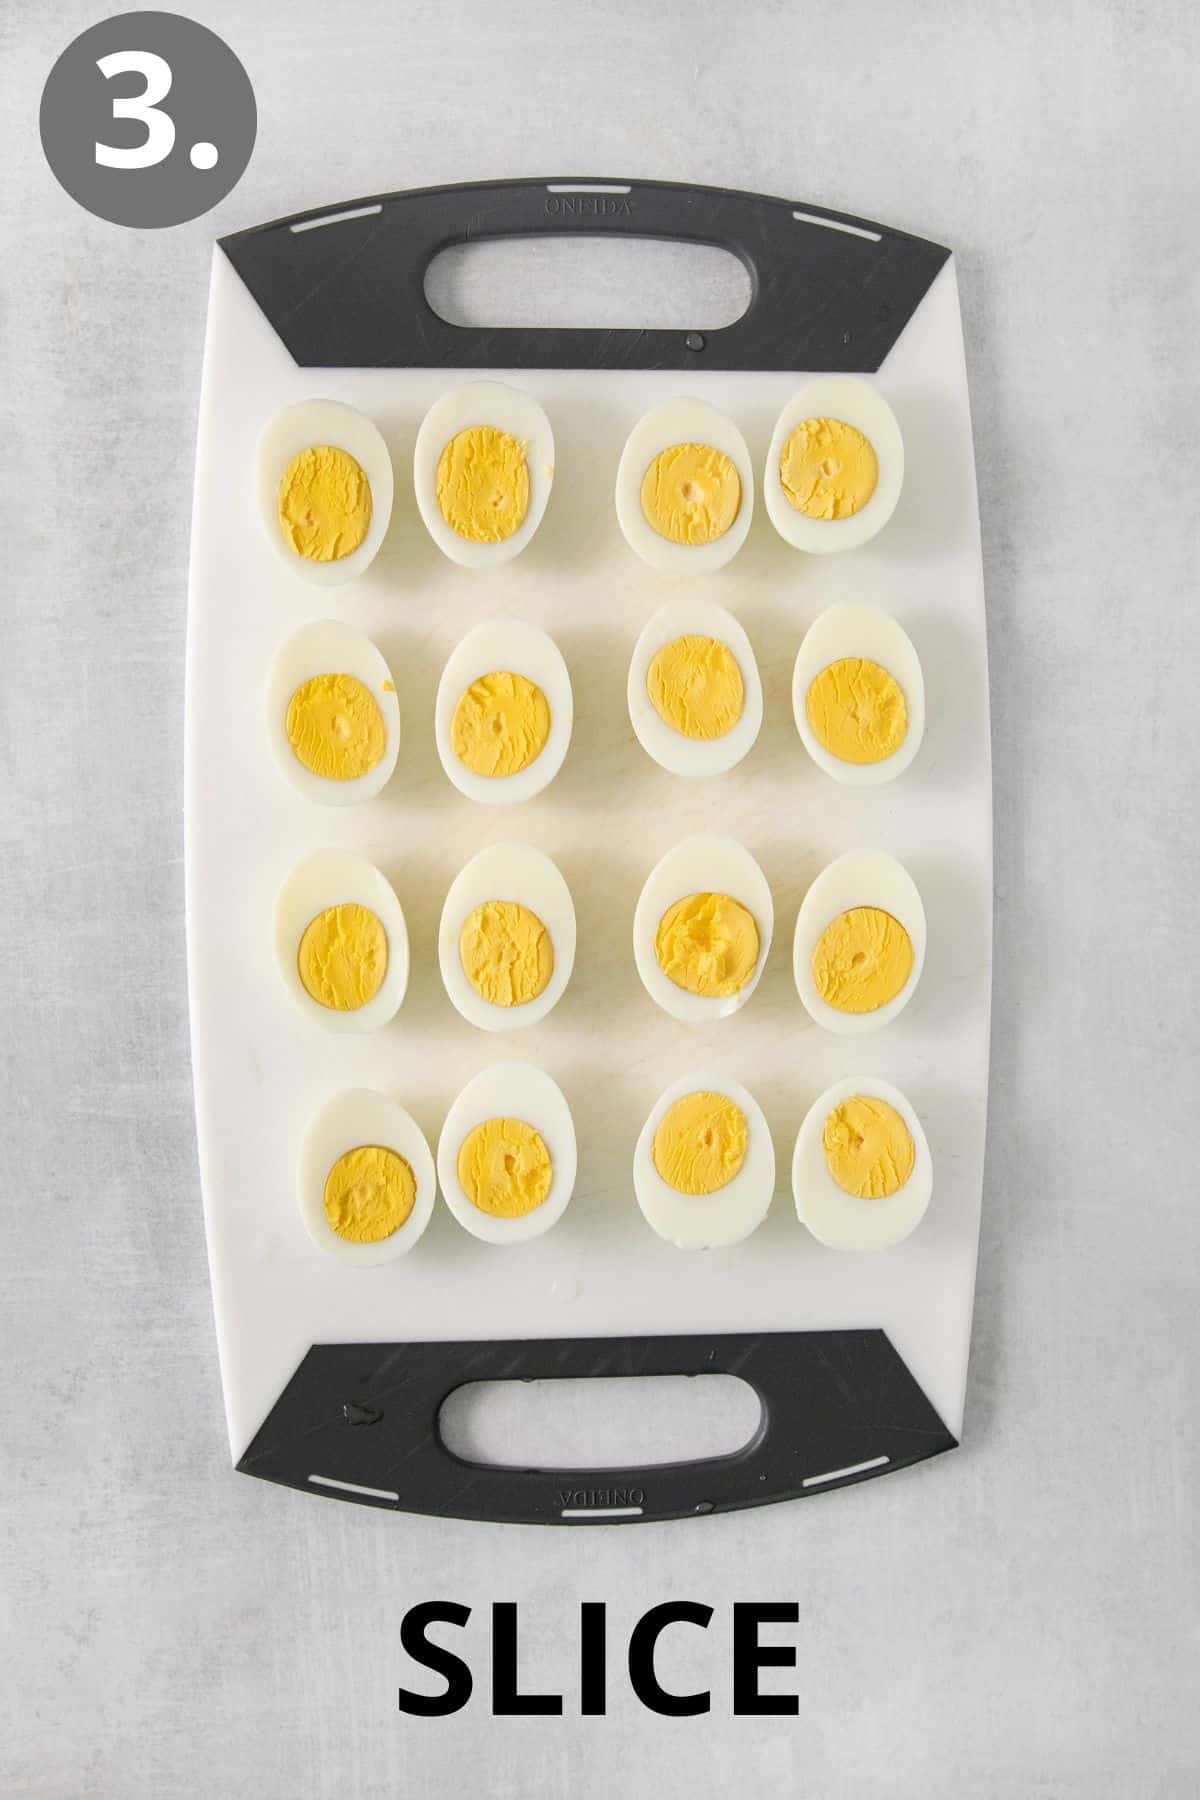 Hard-boiled eggs sliced in half on an a cutting board